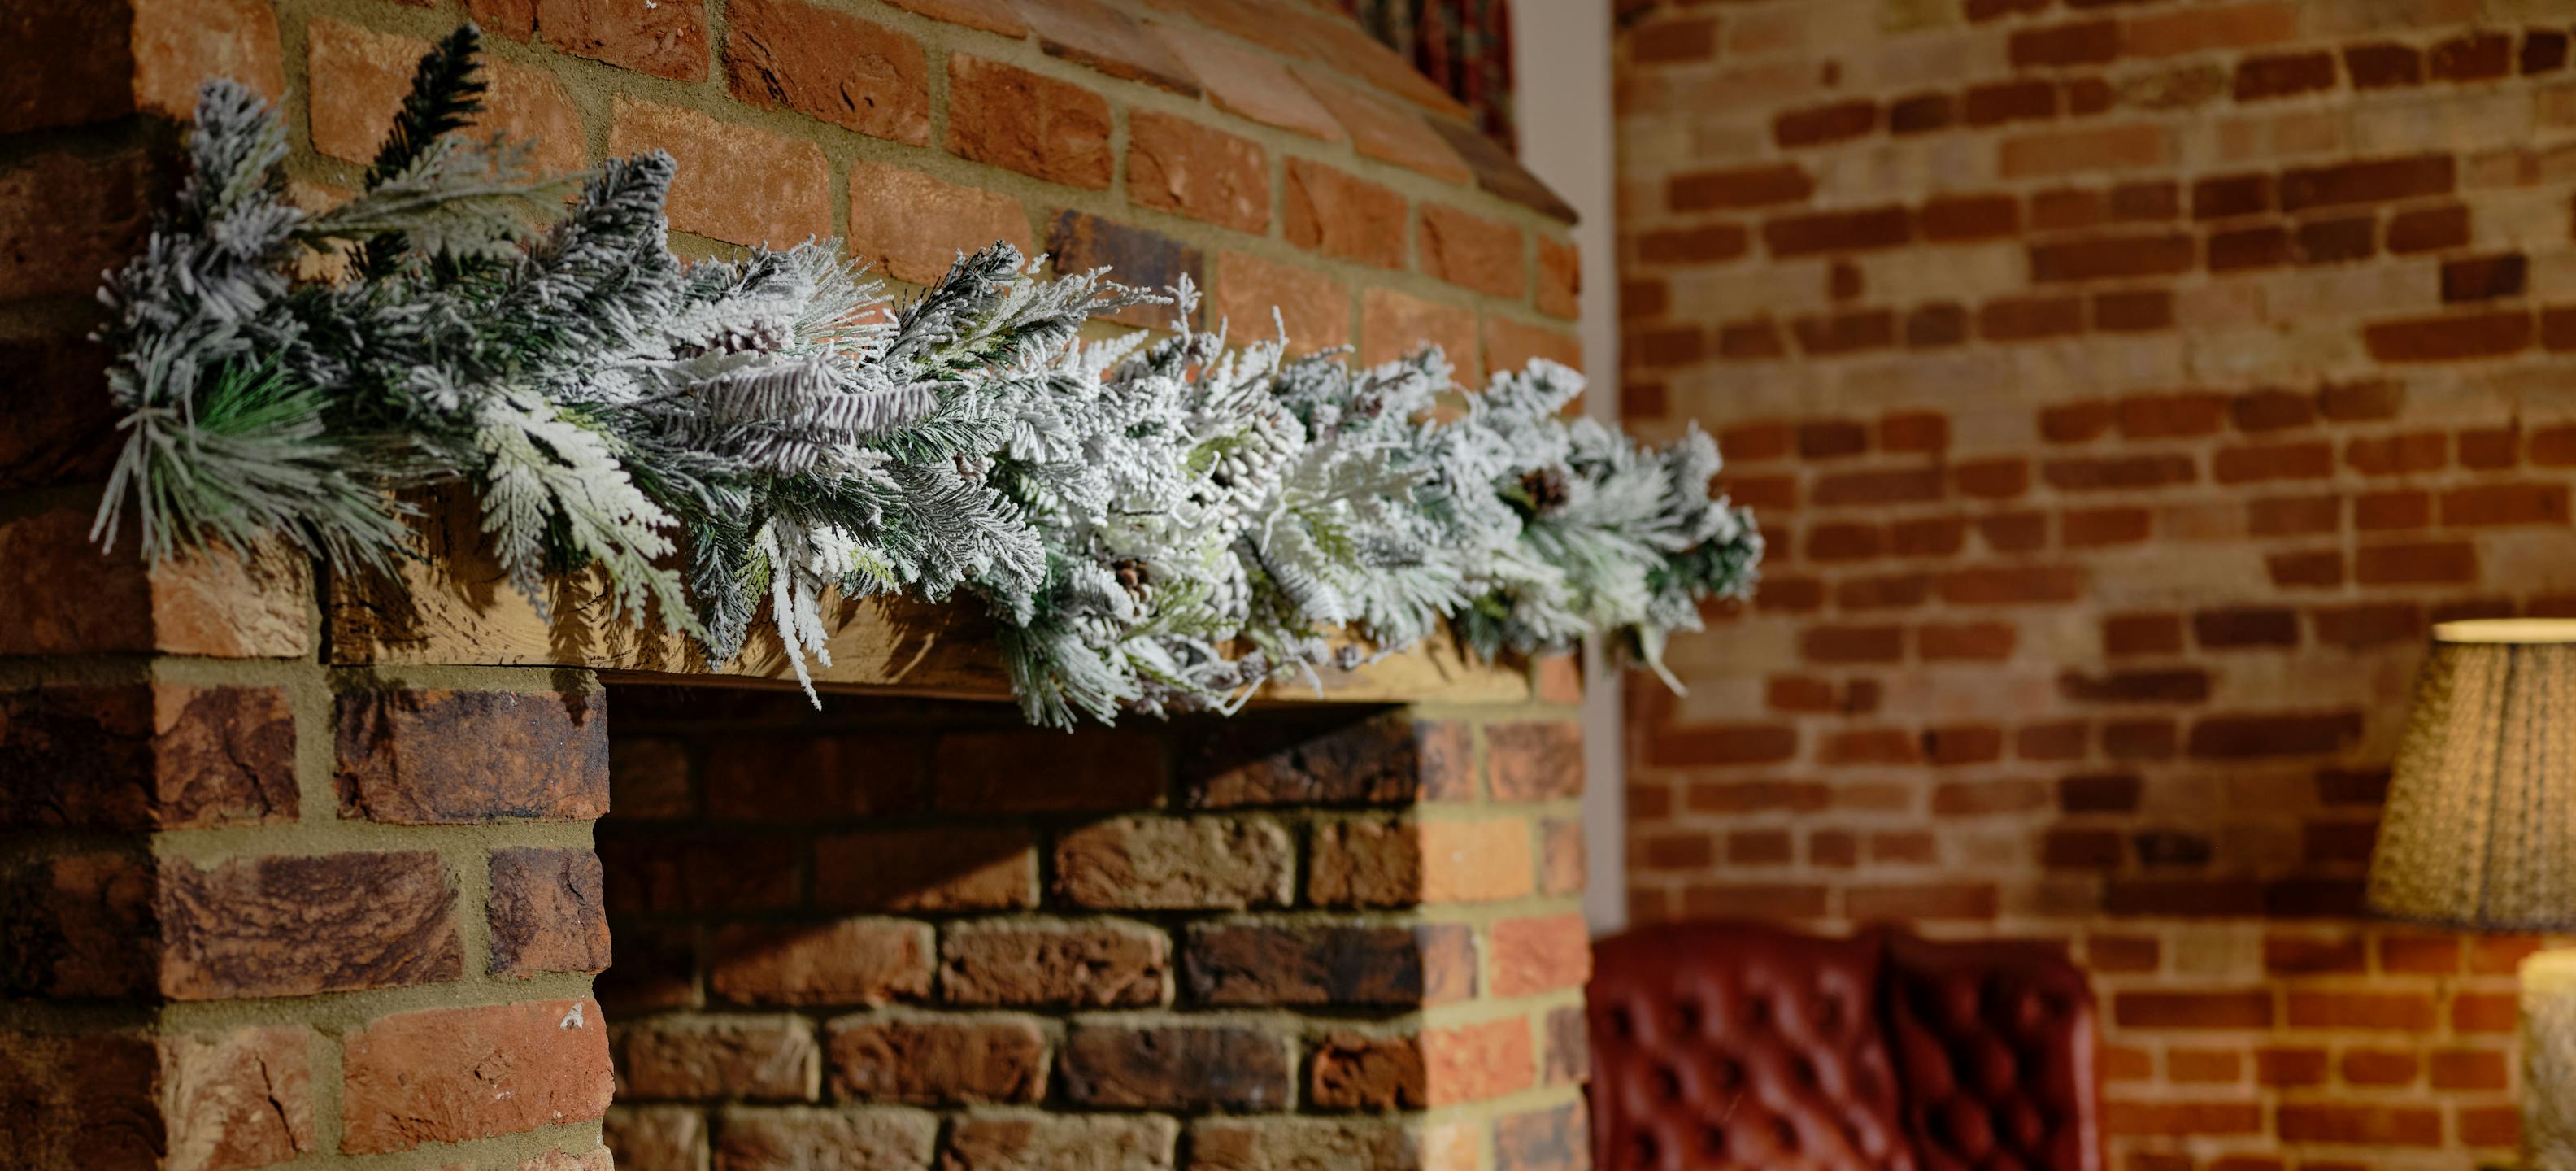 Wintery Siberian type Christmas garland over fireplace